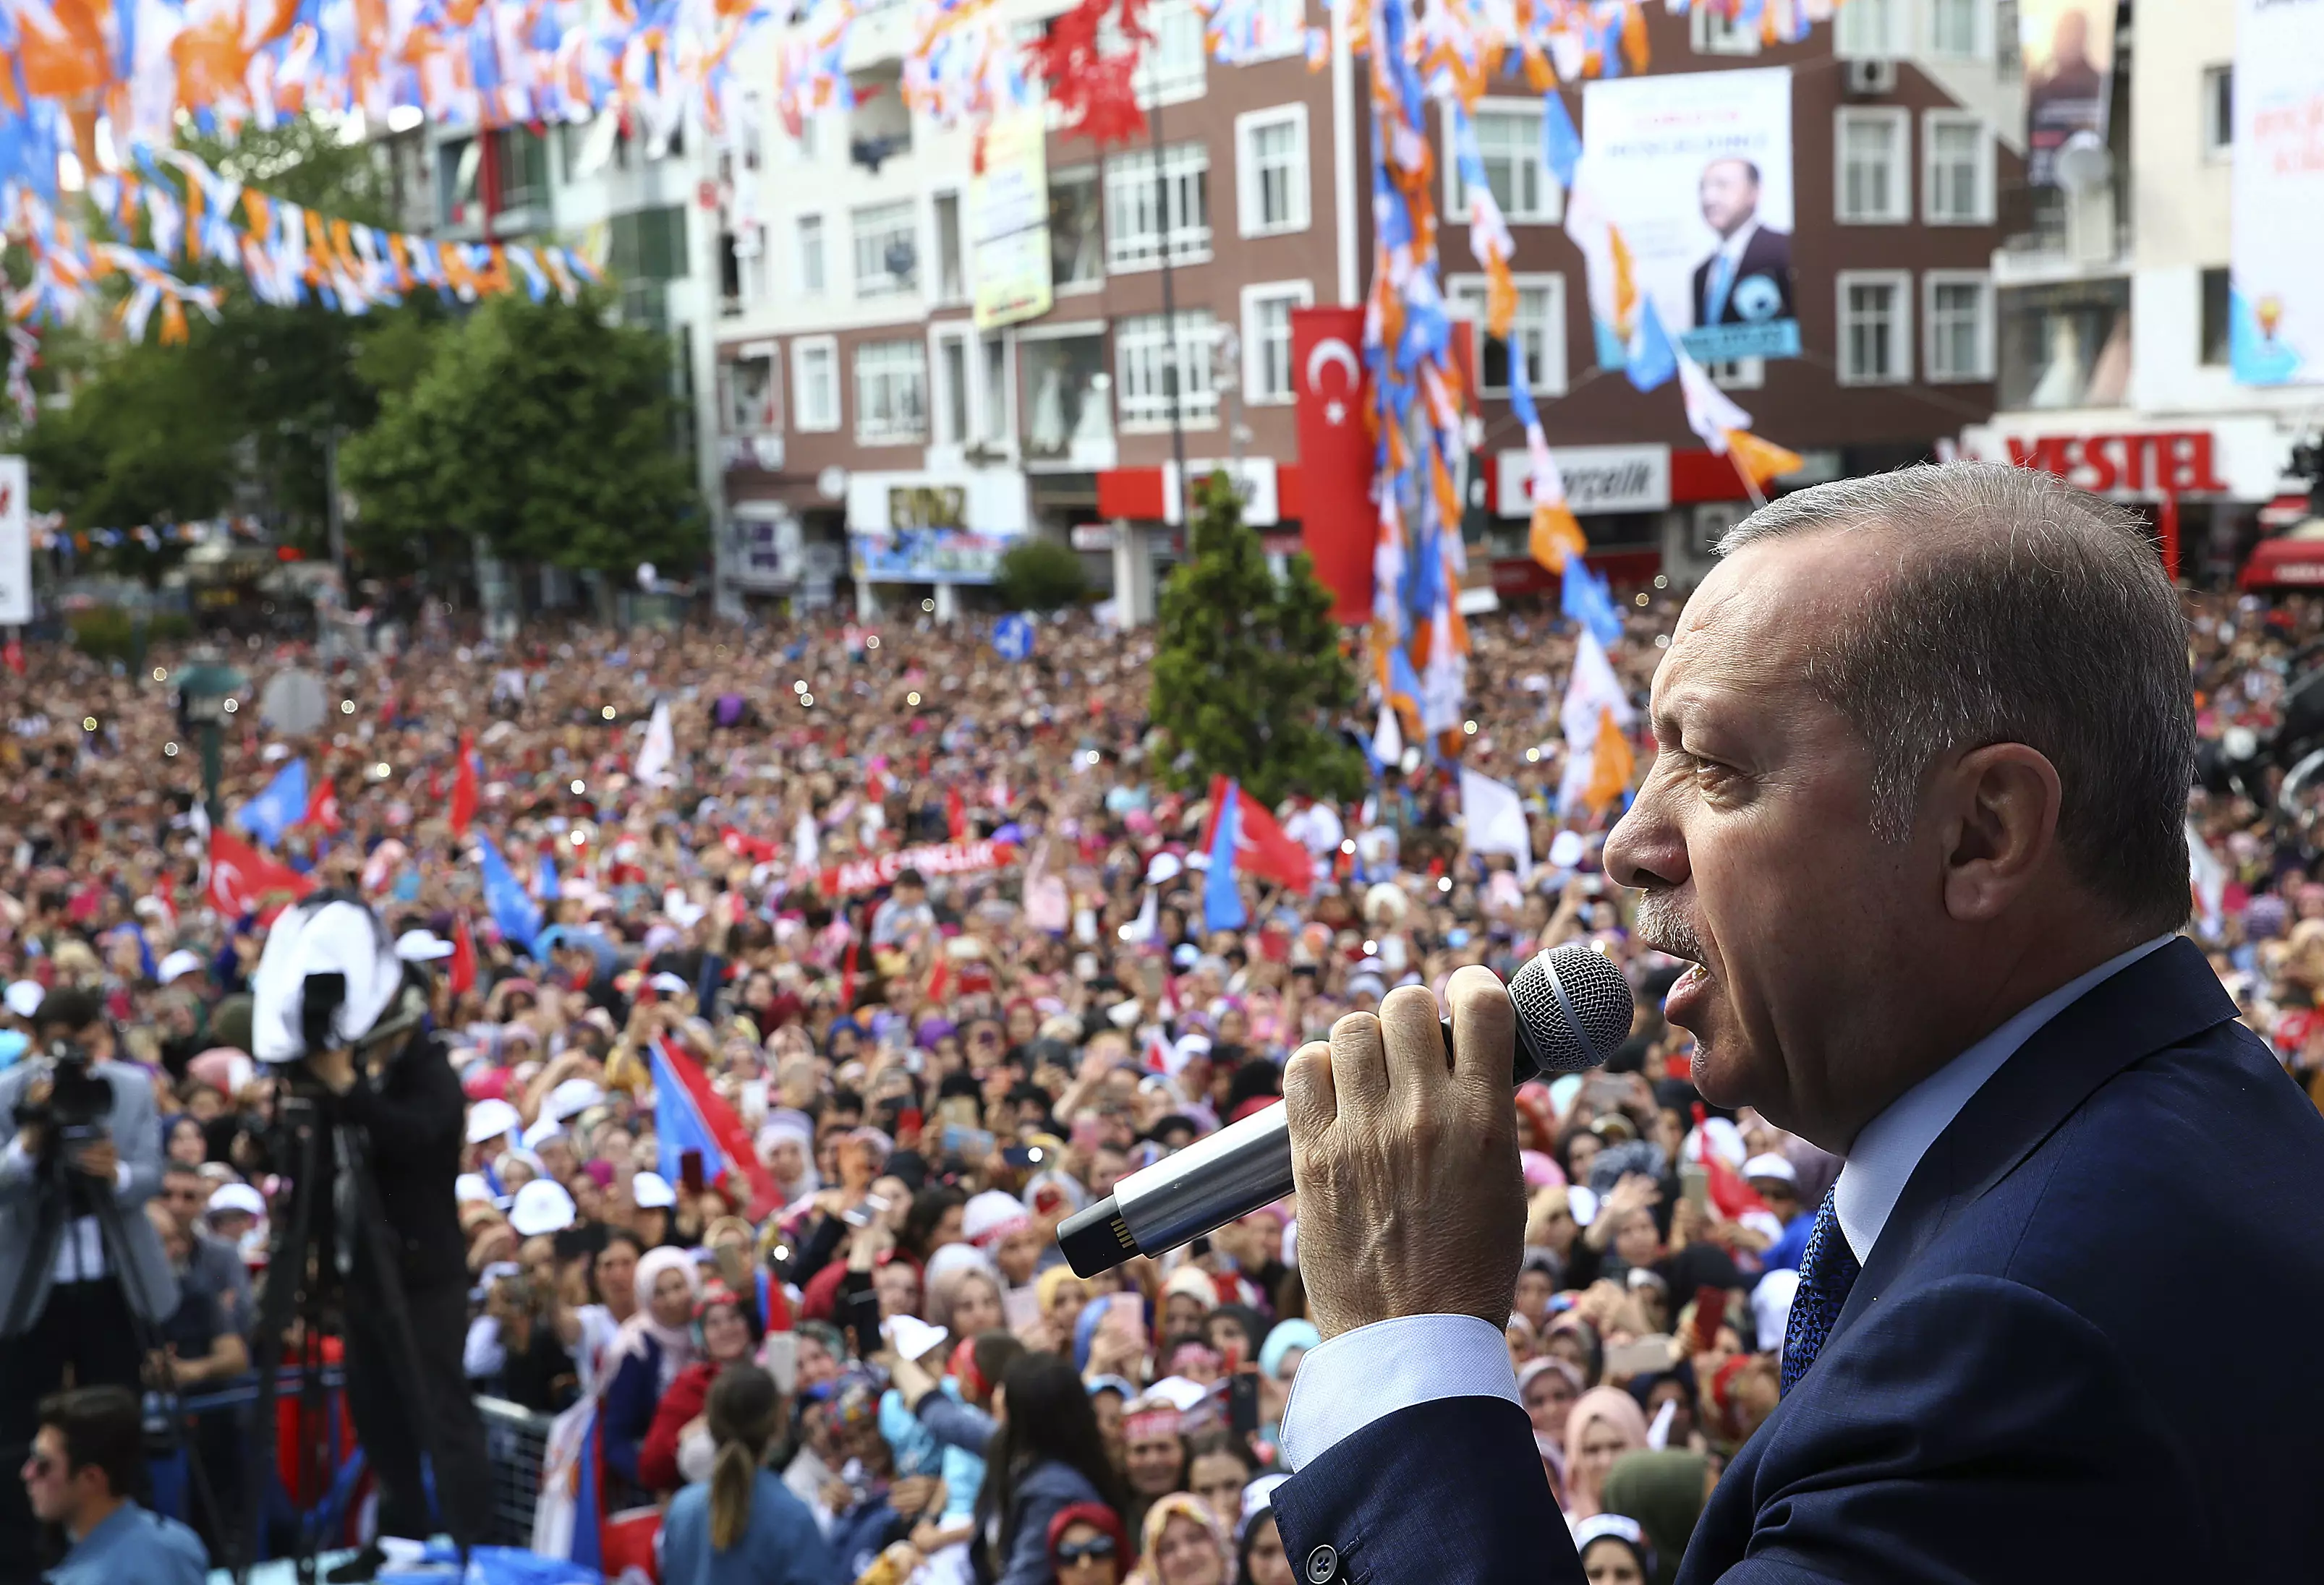 Turkey's President Recep Tayyip Erdogan speaks to people at campaign rally.